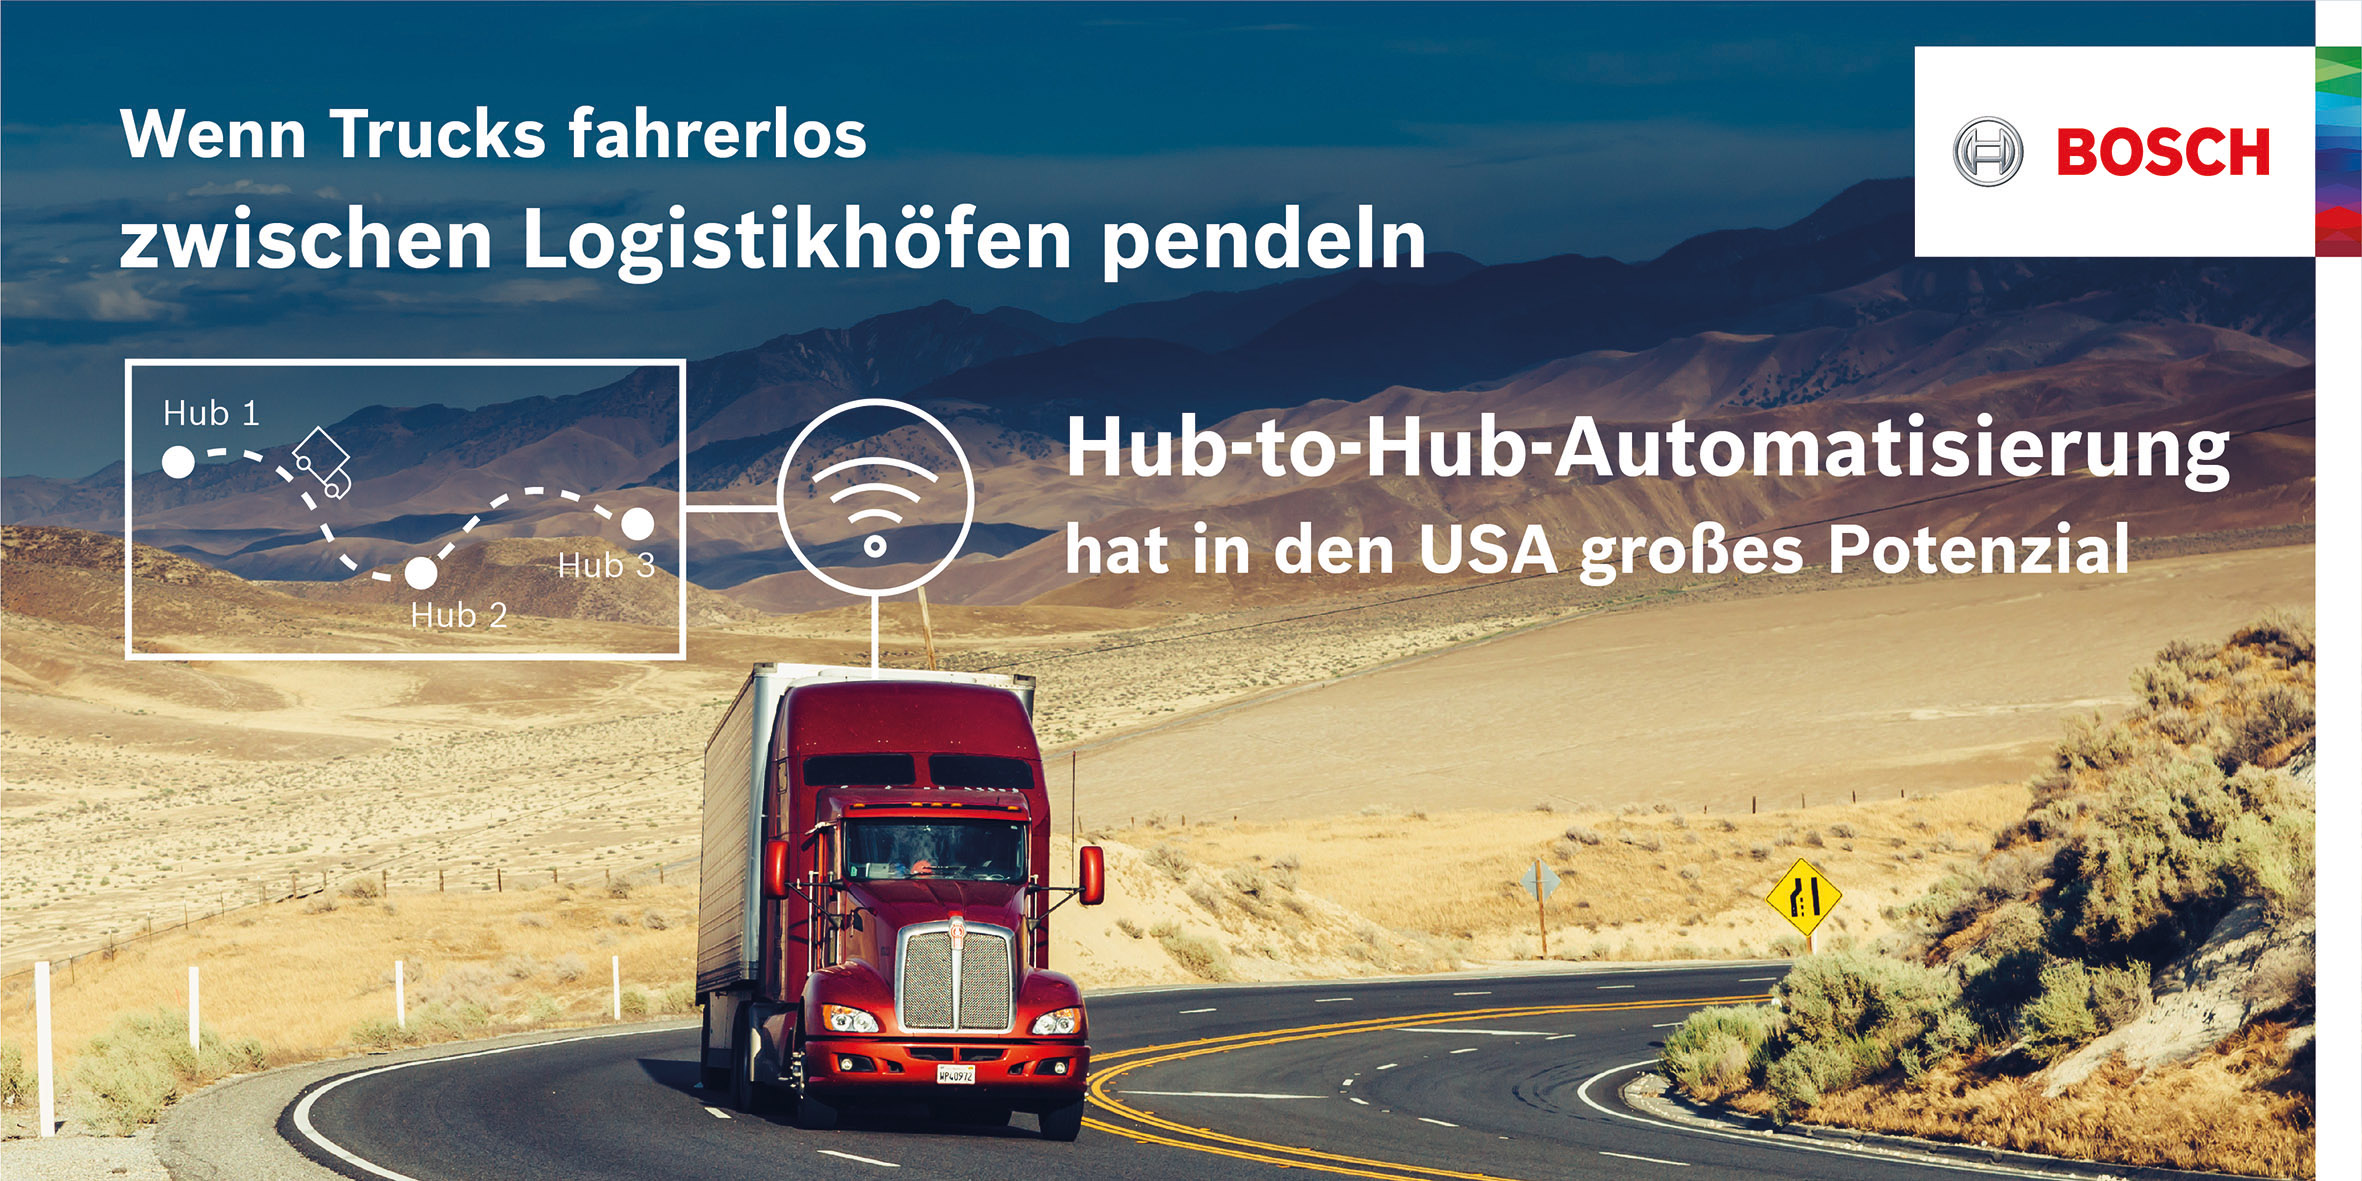 Hub-to-Hub-Automatisierung